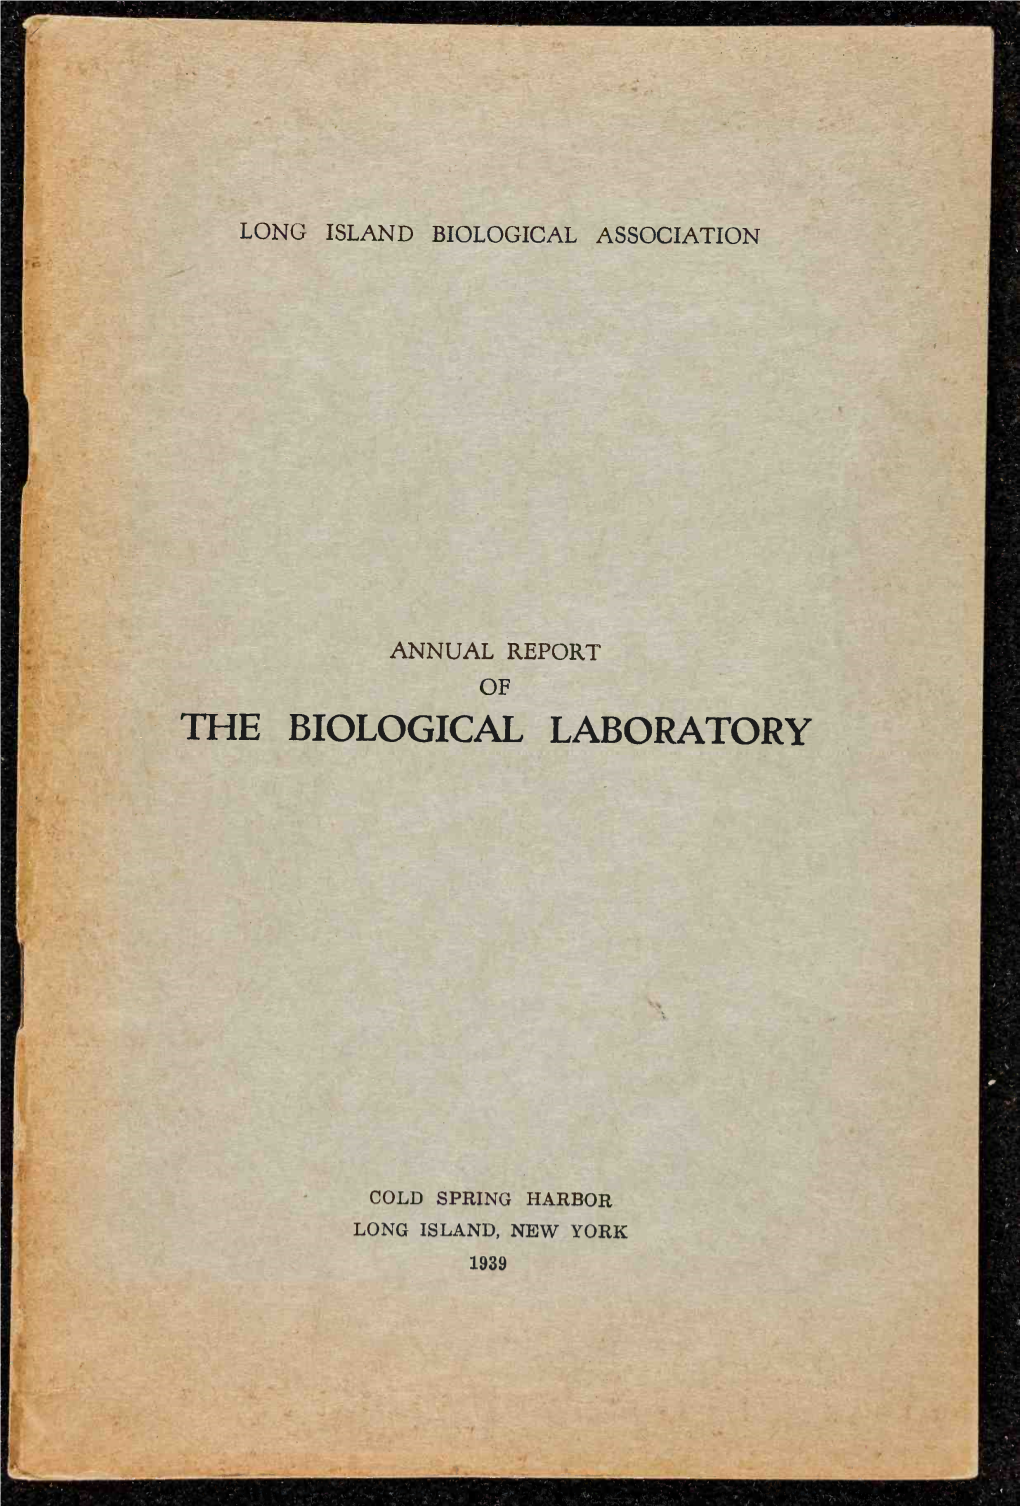 The Biological Laboratory